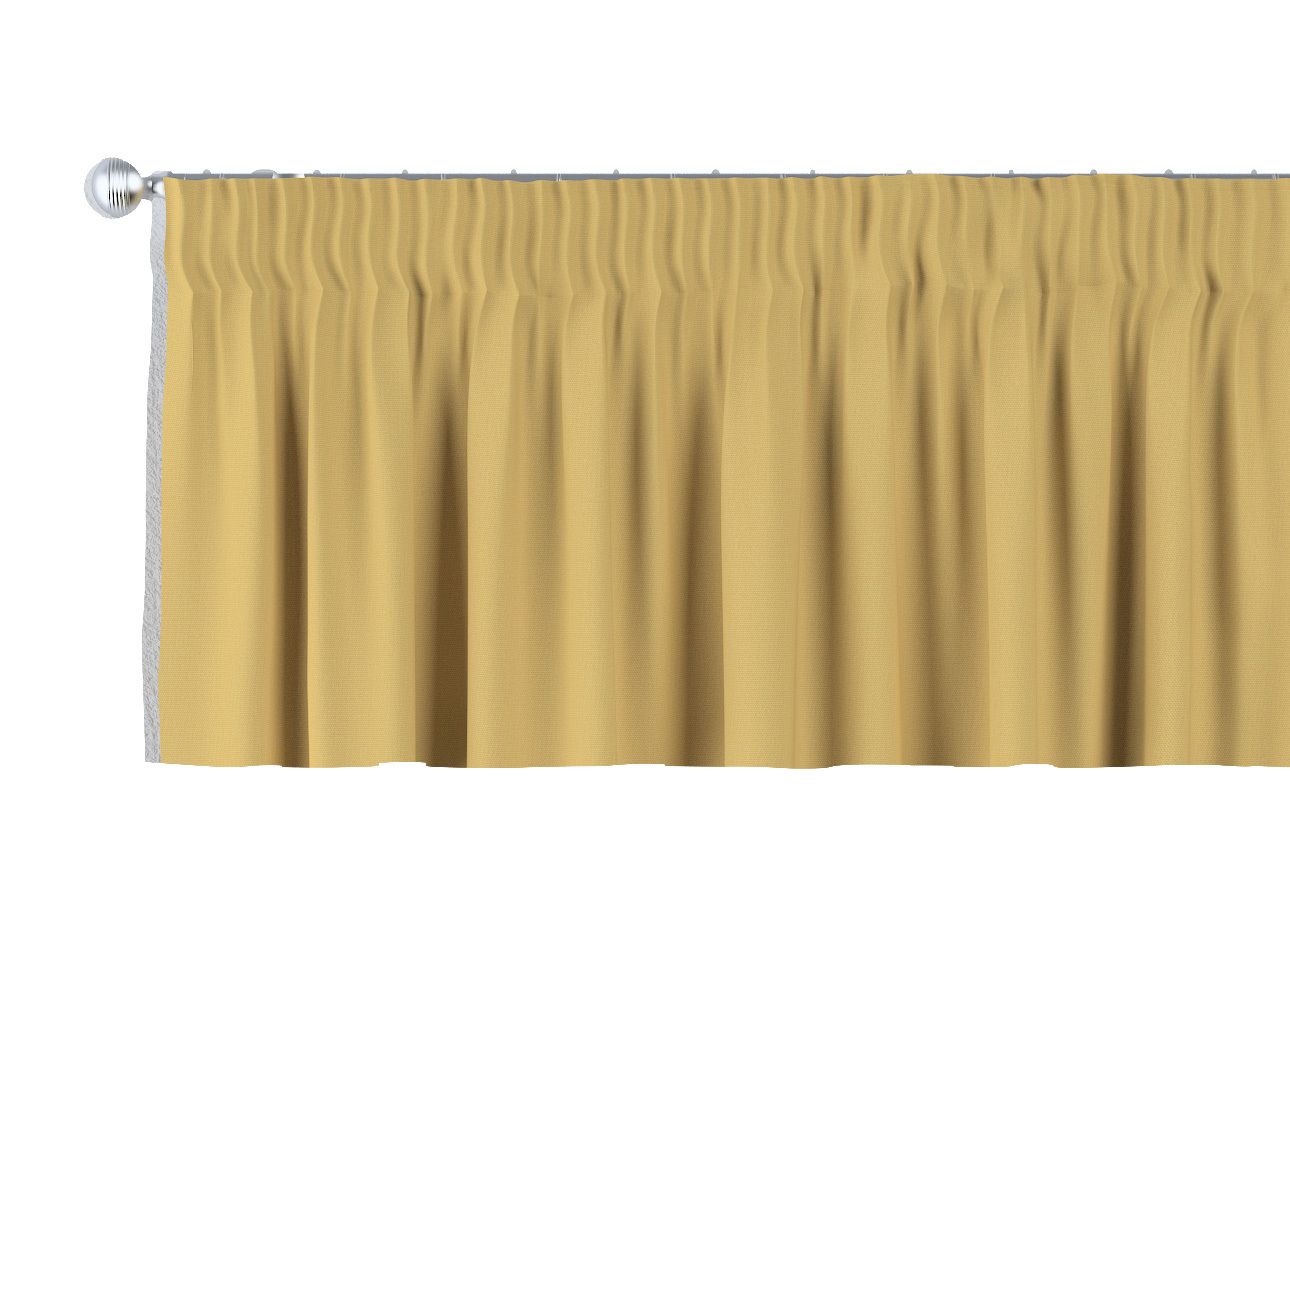 Kurzgardine mit Kräuselband, chiffongelb, 390 x 40 cm, Cotton Panama (702-4 günstig online kaufen